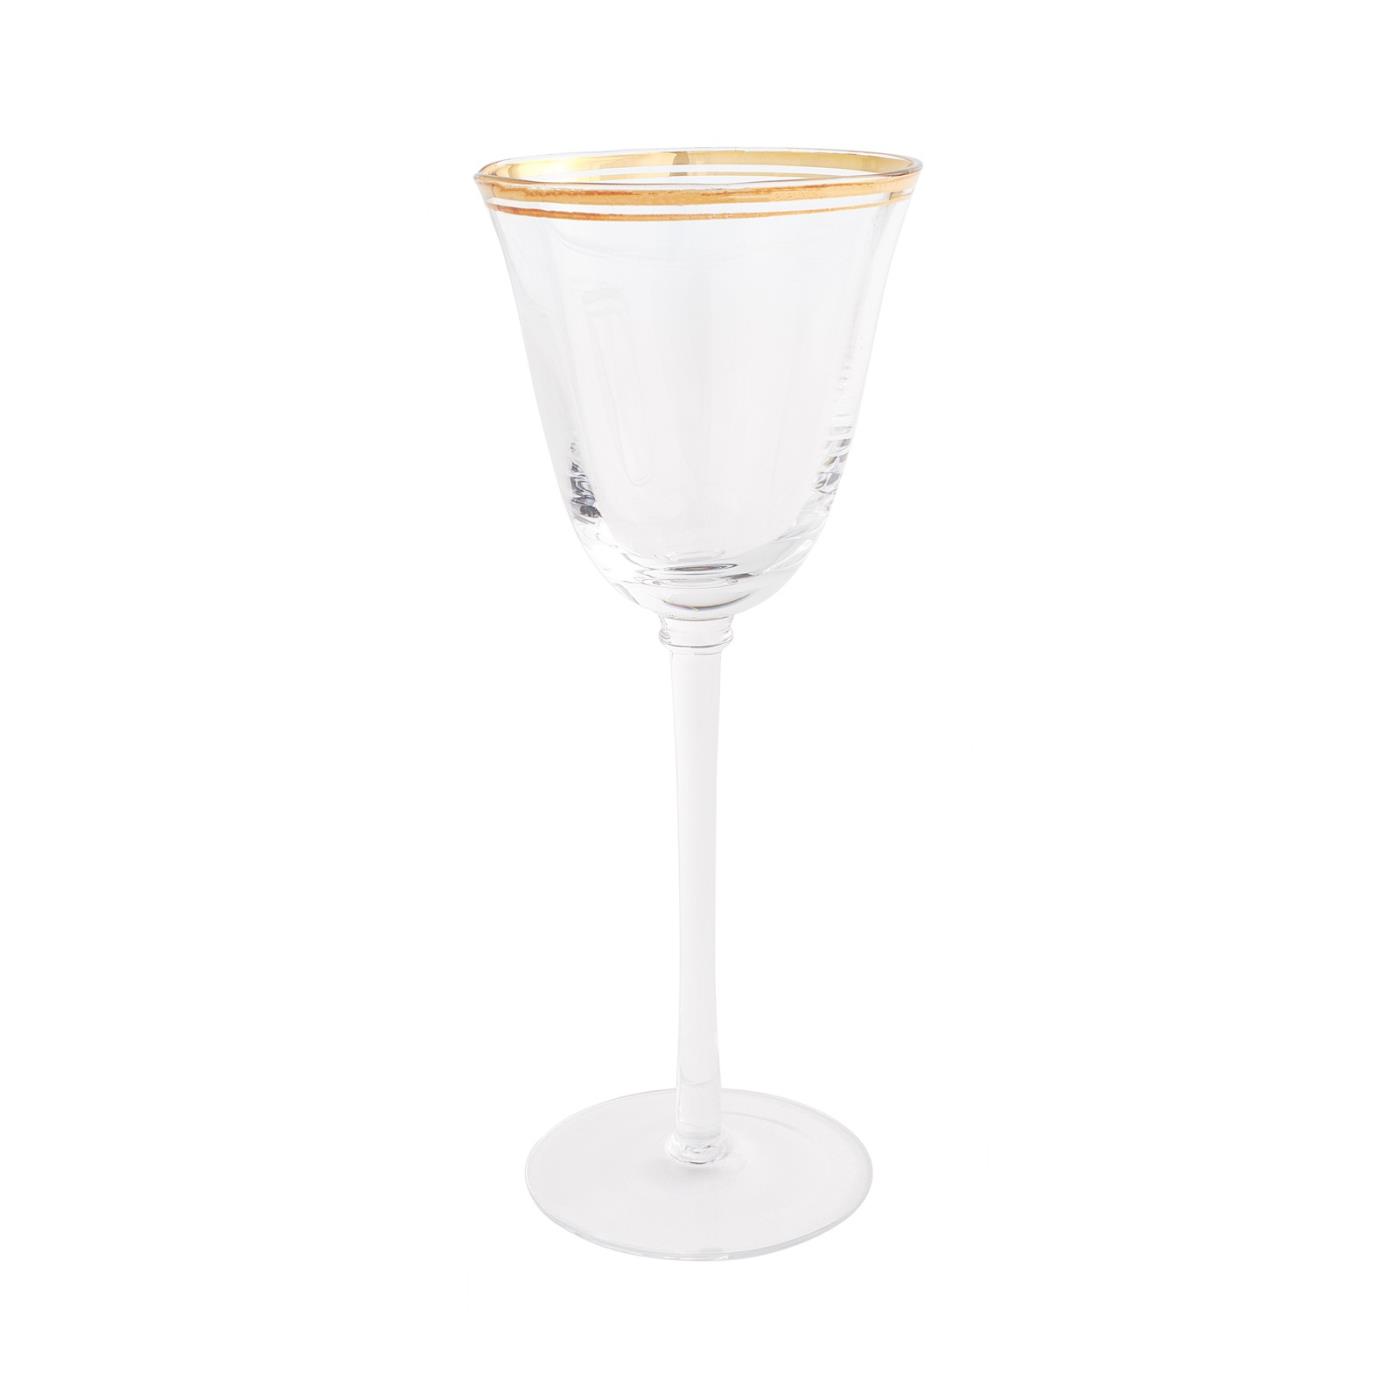 Windsor Gold - White Wine Glass 6 oz